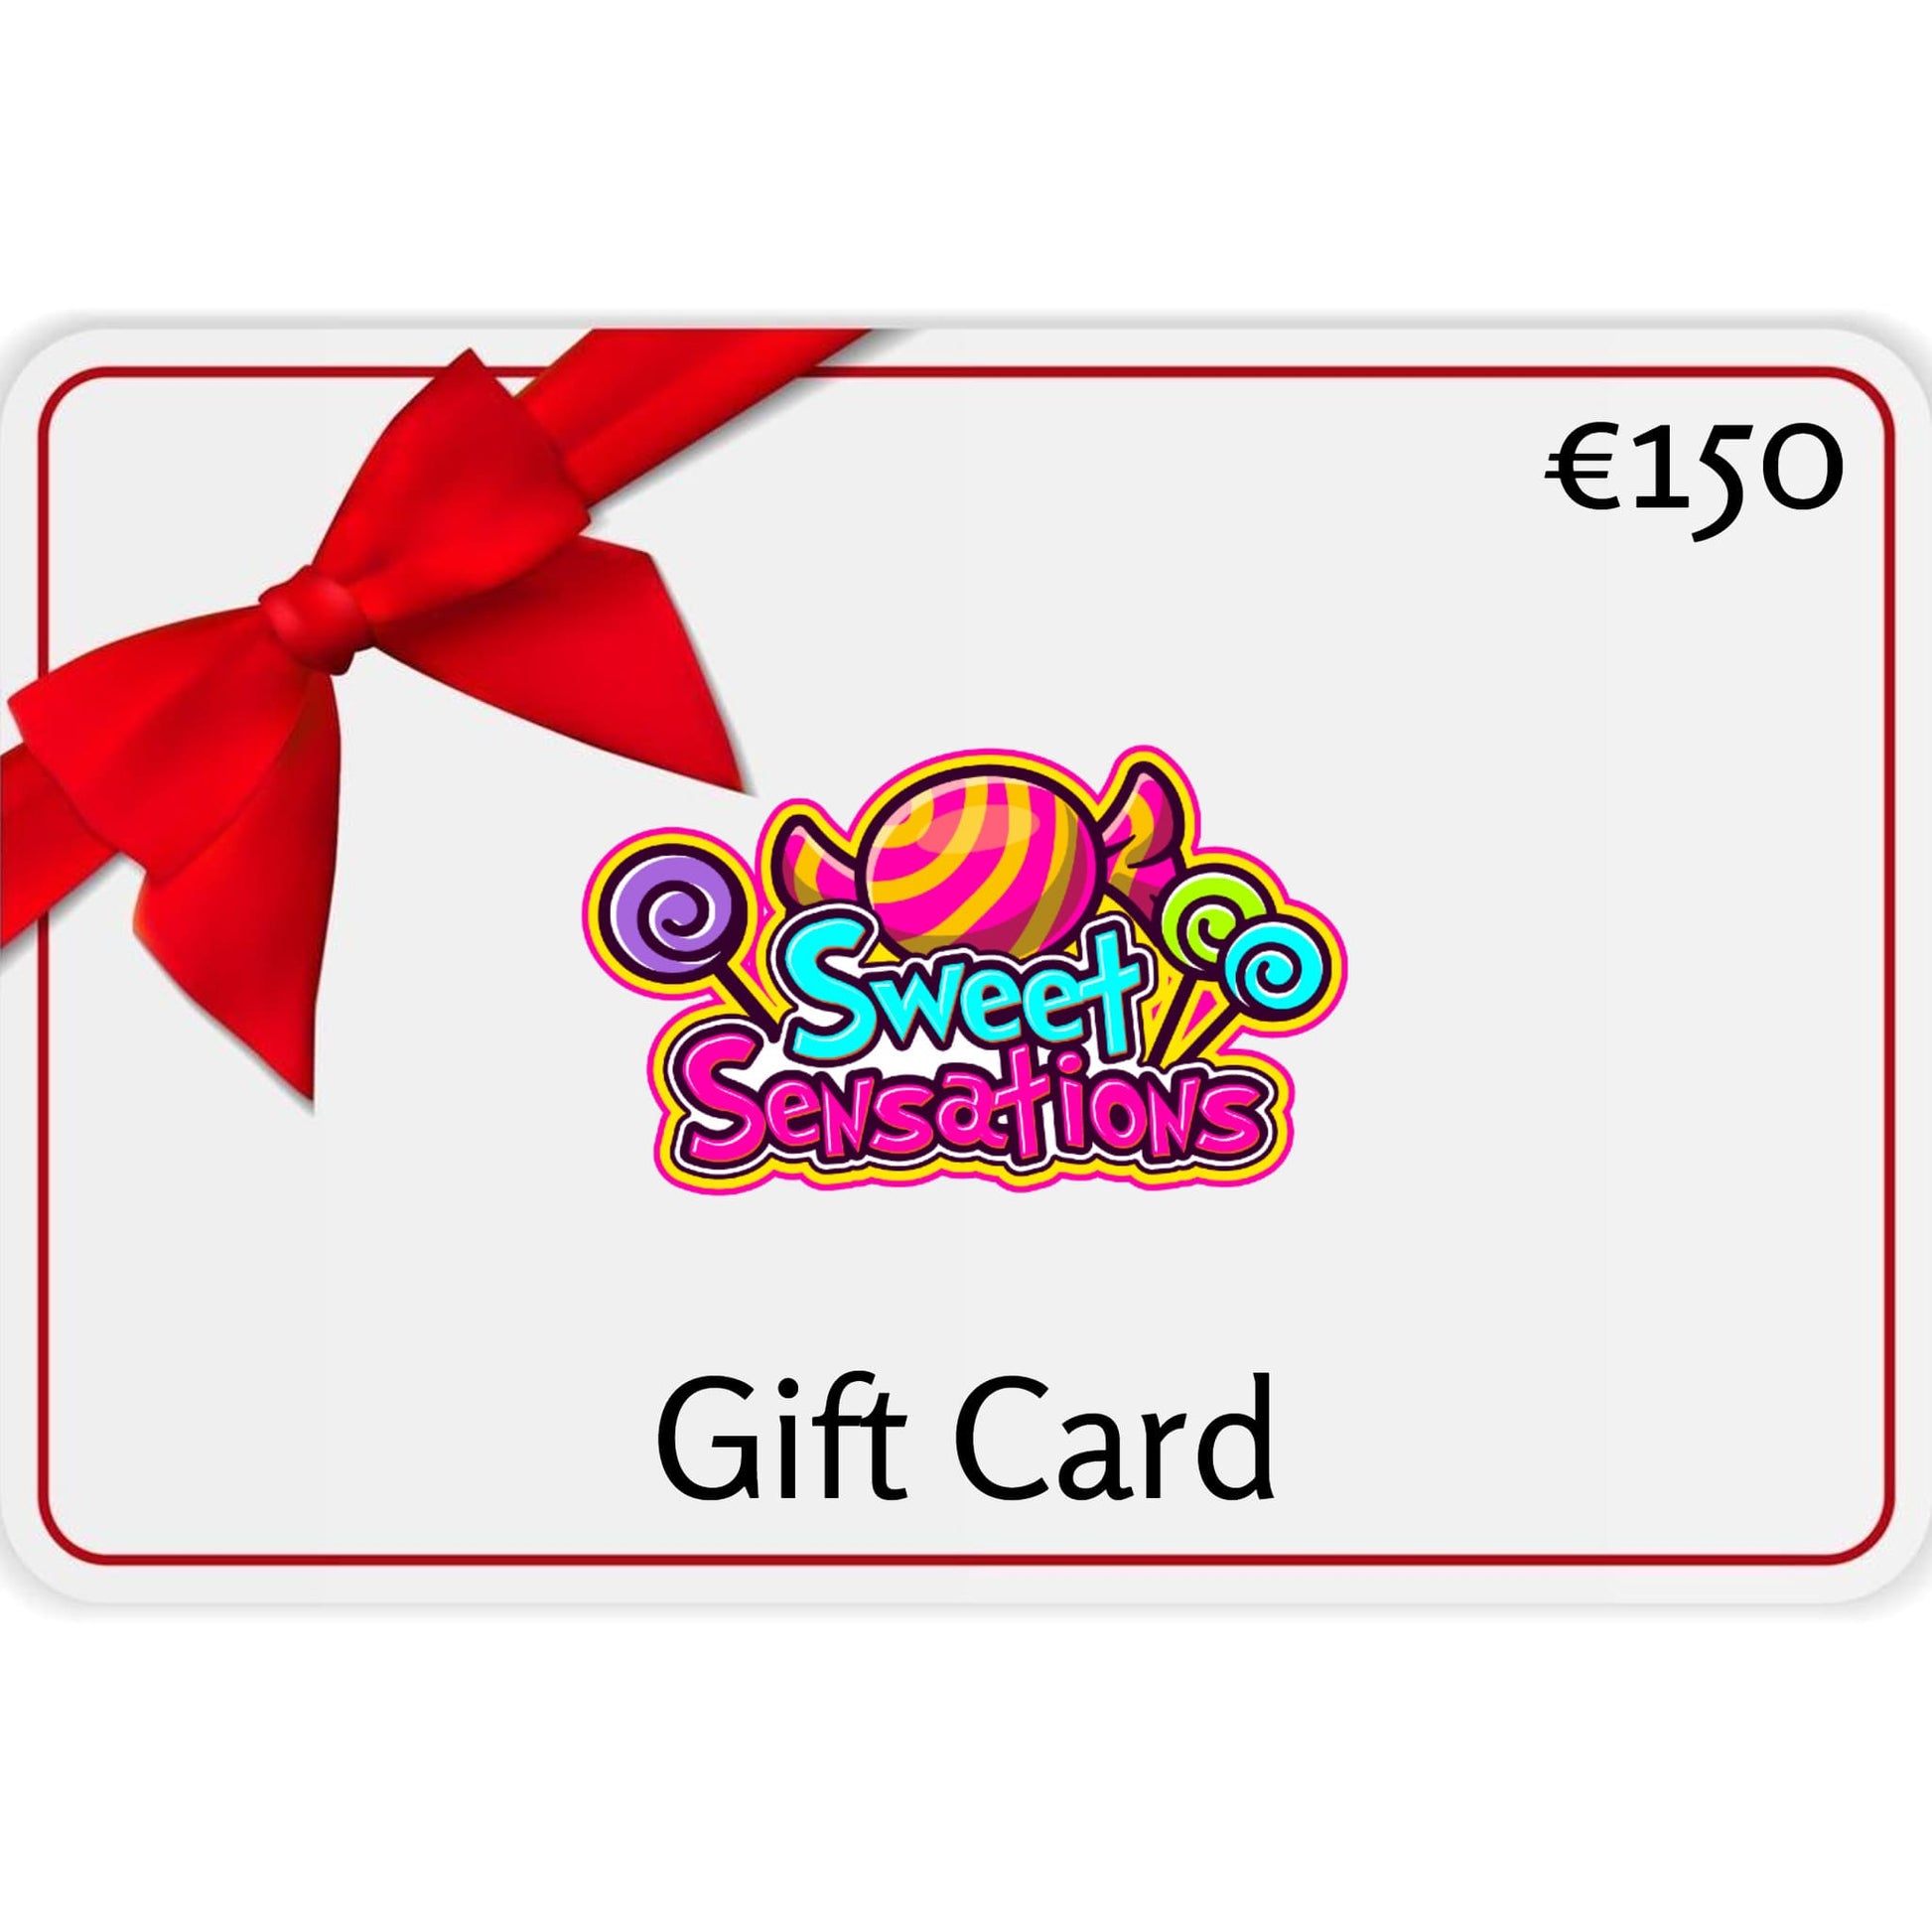 Sweet Sensations €150 Gift Card